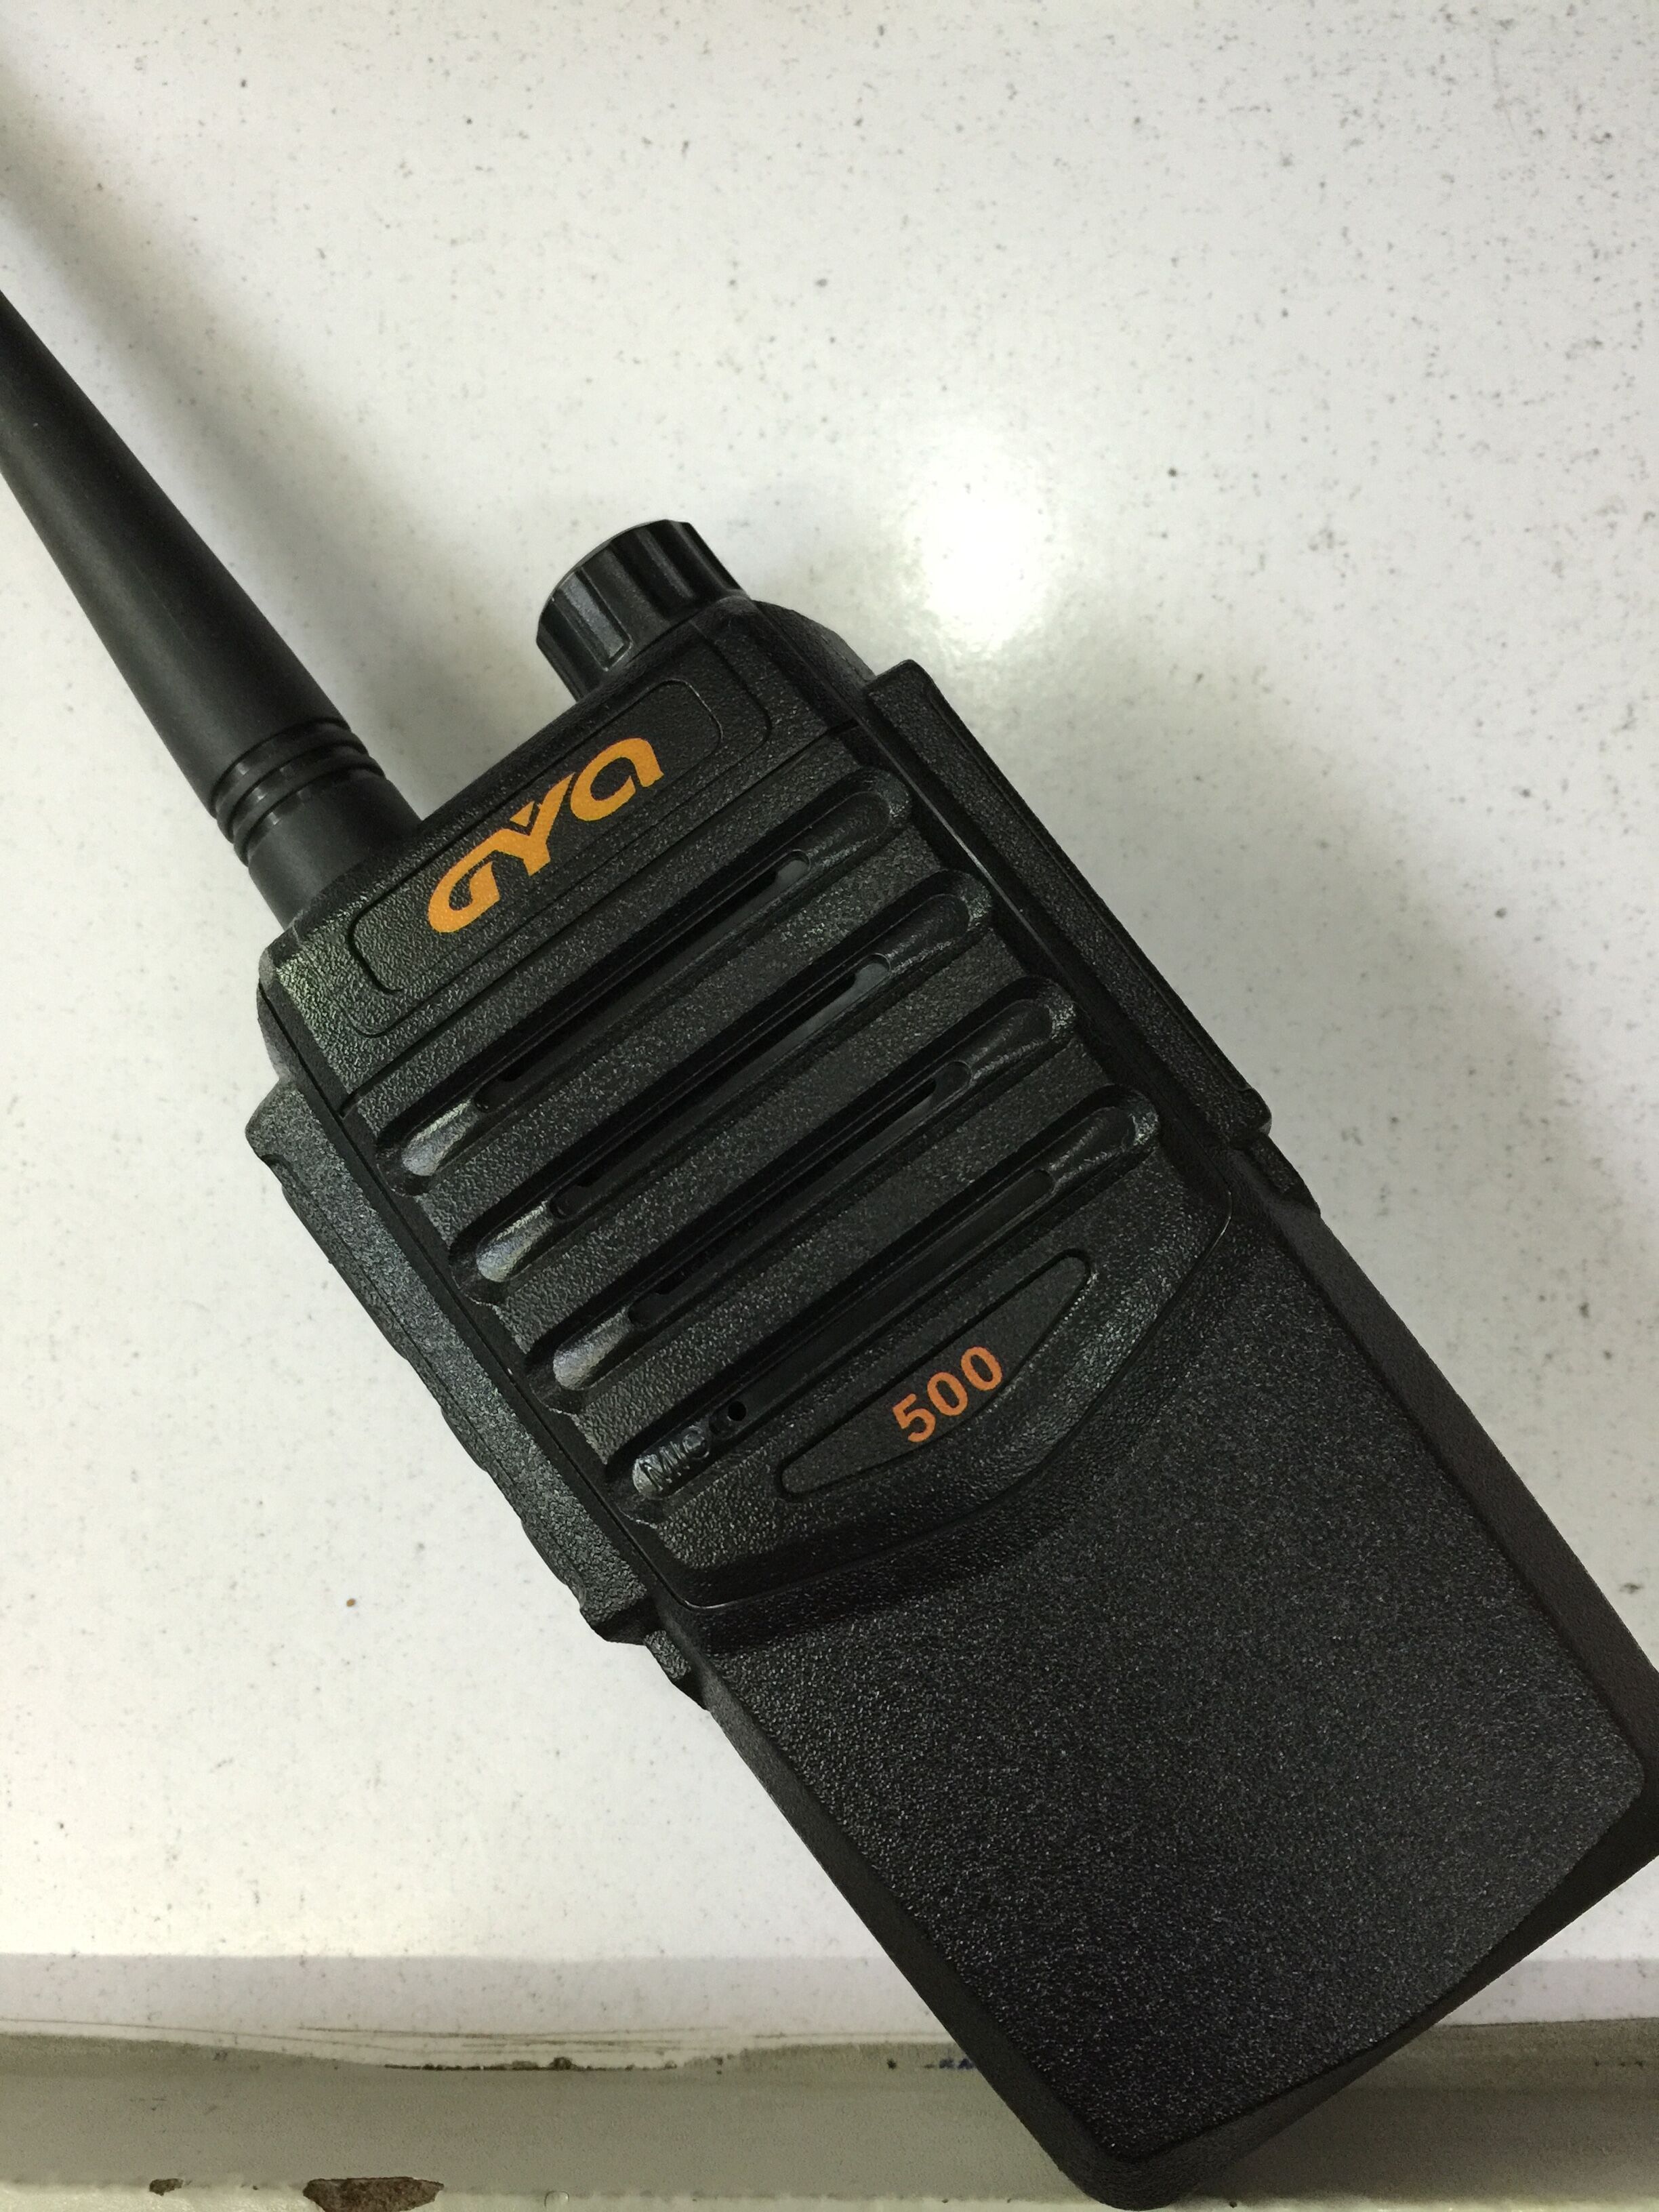 GYQ/高颖奇-500对讲机 GYQ-500对讲机1800MA容量 包邮送耳机